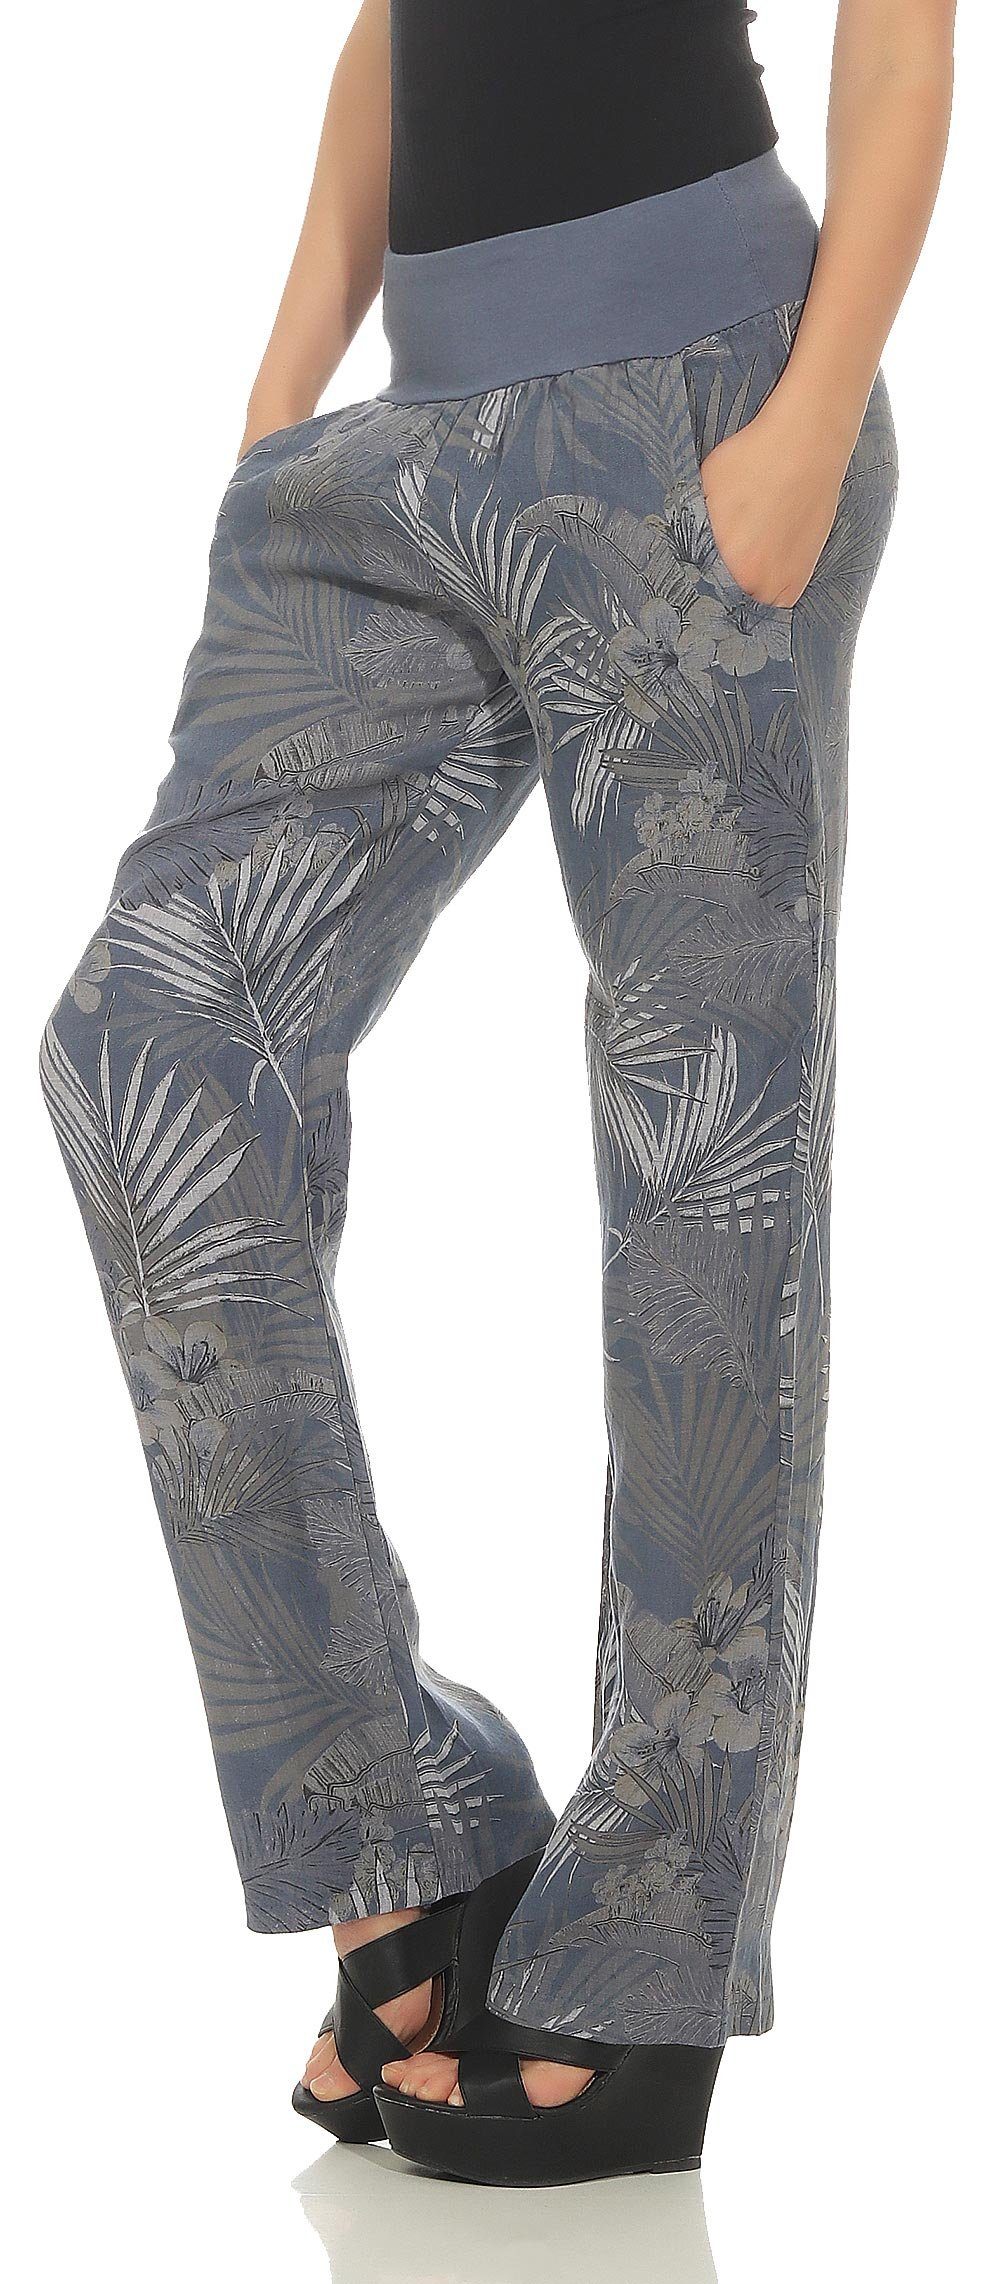 fashion jeansblau aus Leinen more Jungle Print than Leinenhose 7790 malito Hose mit